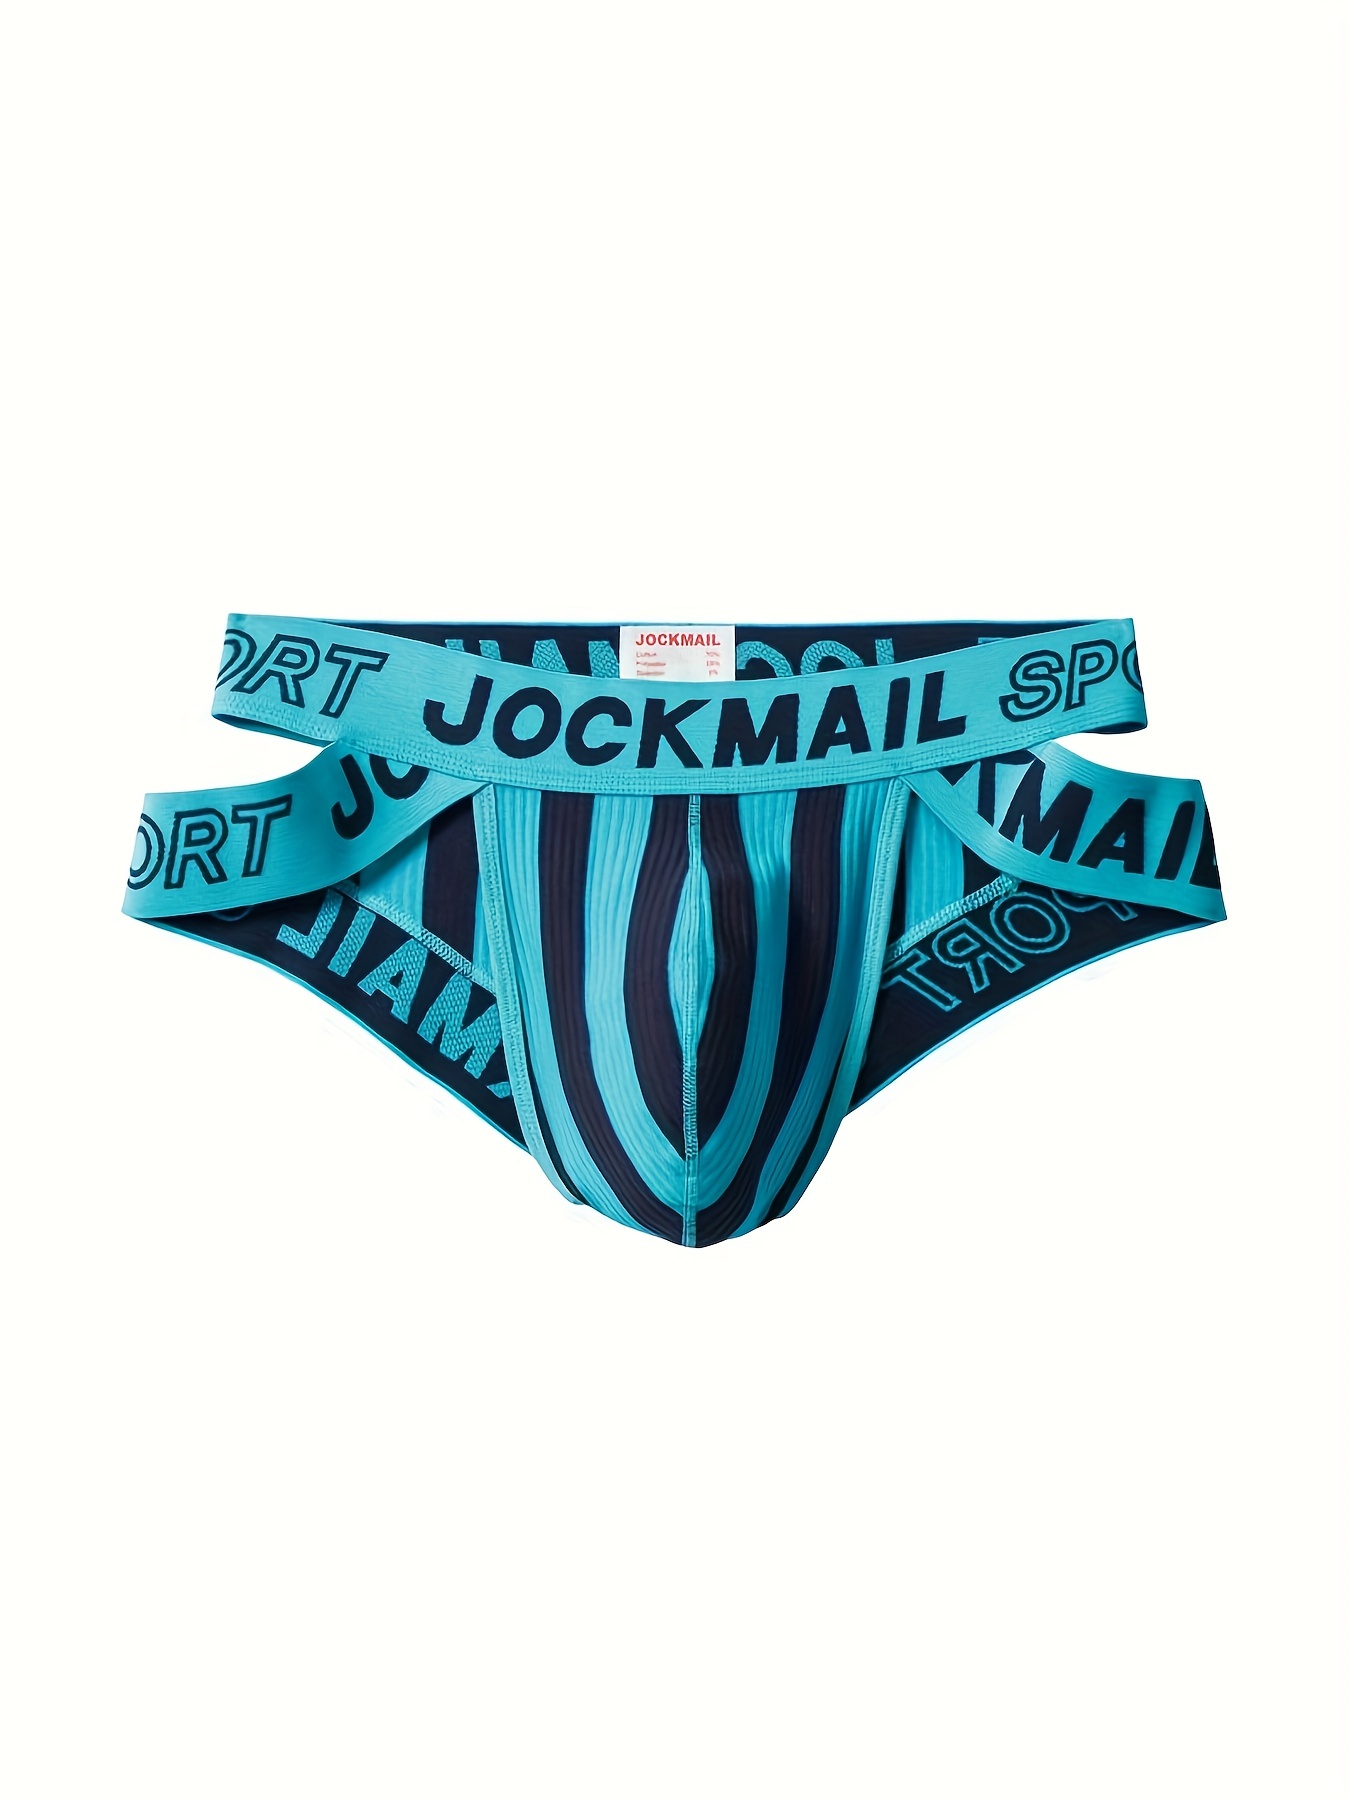 Jockmail Men's Cotton Fashion Letter Print Striped Underwear